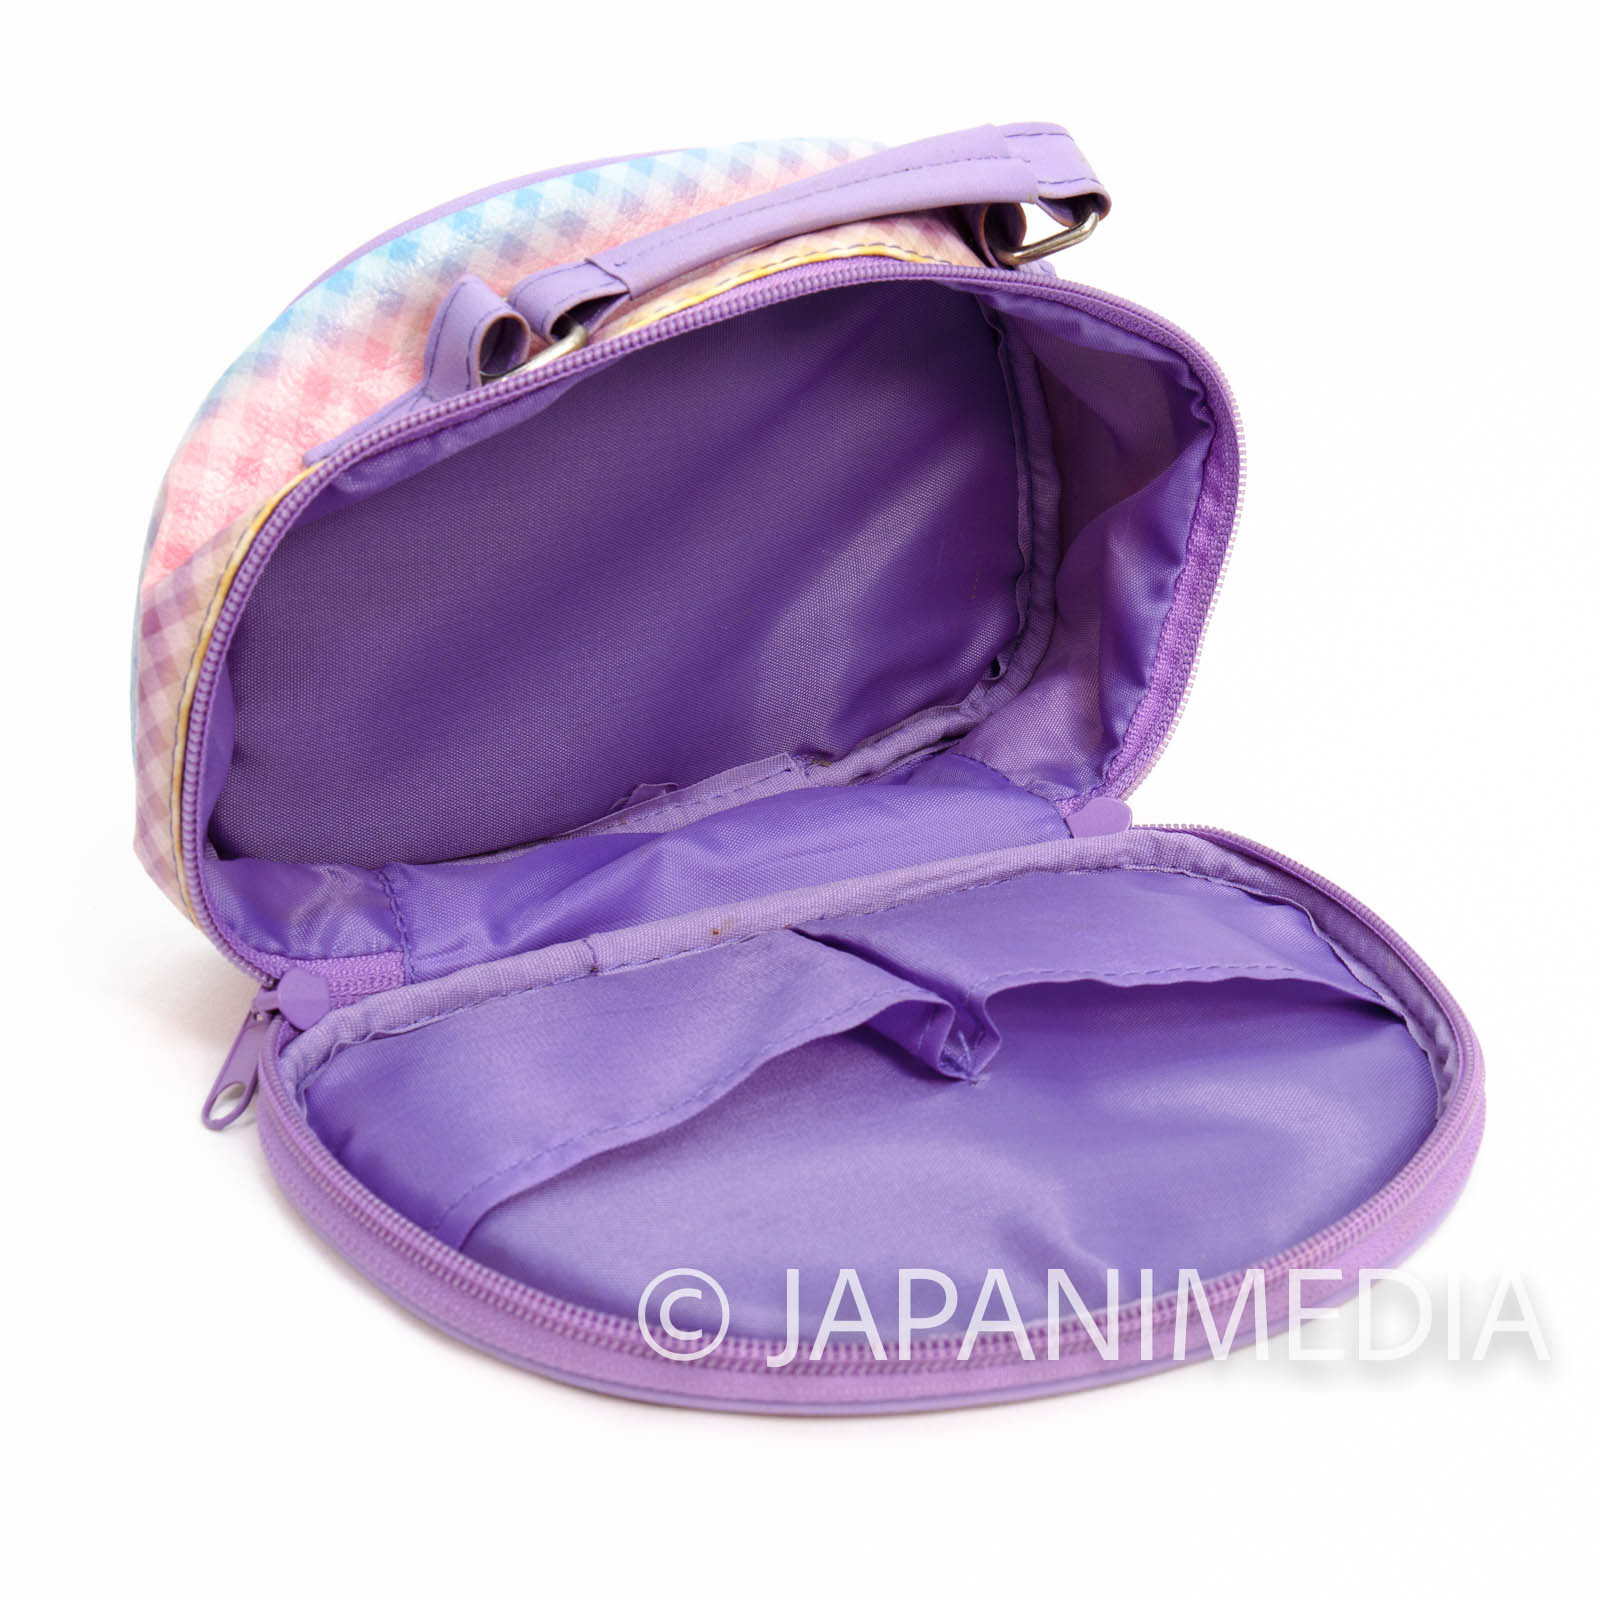 Doki Doki! PreCure Pouch Bag JAPAN ANIME